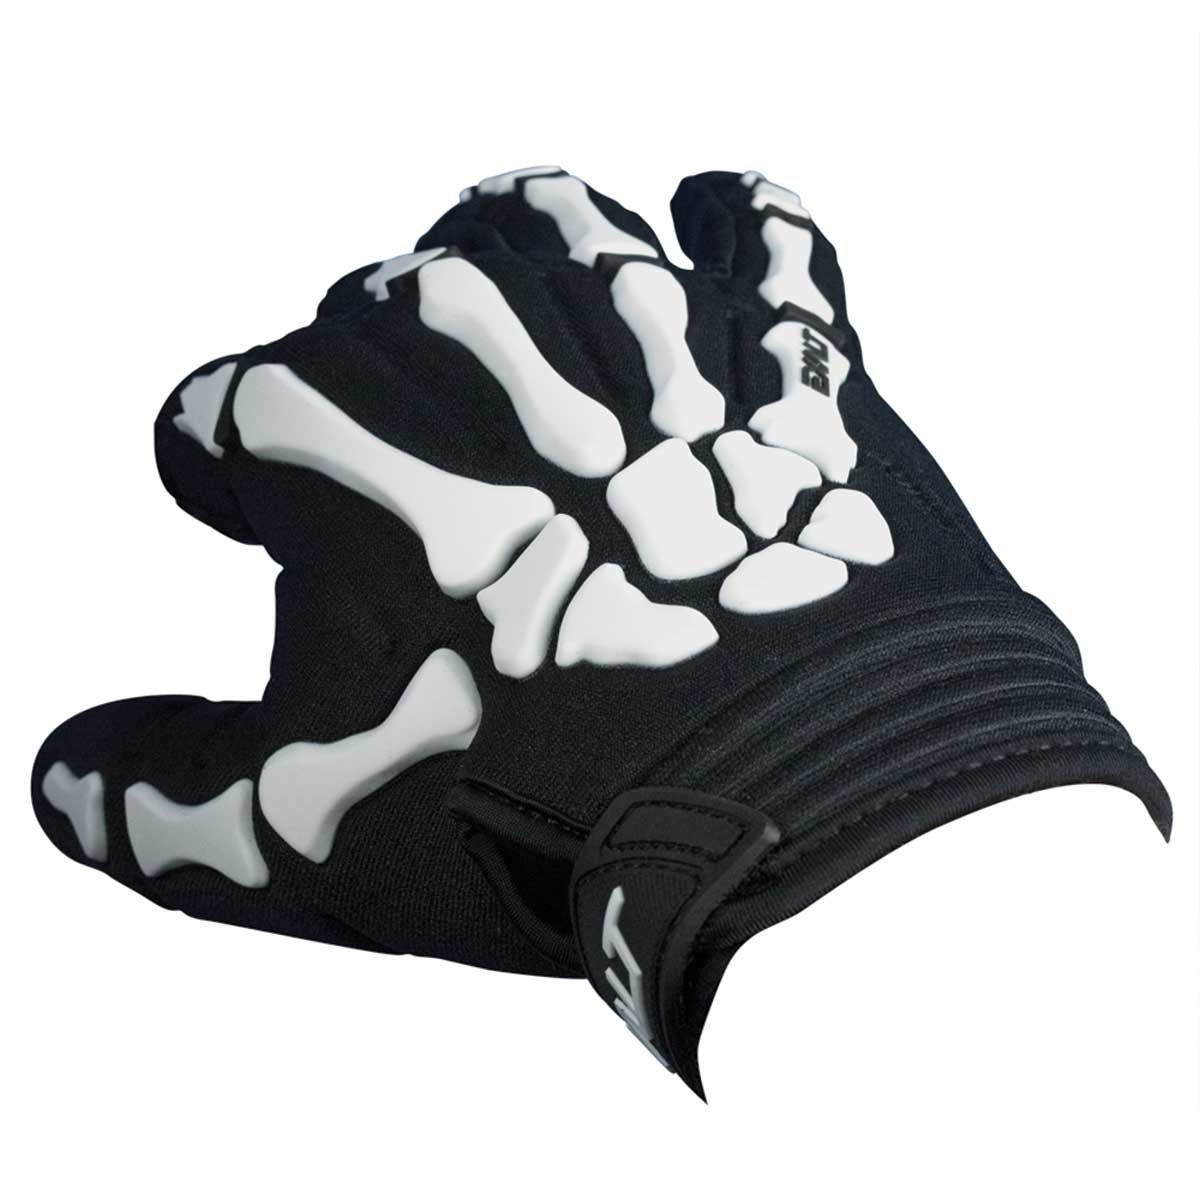 Exalt Death Grip Gloves White/Black - X-Large - Exalt